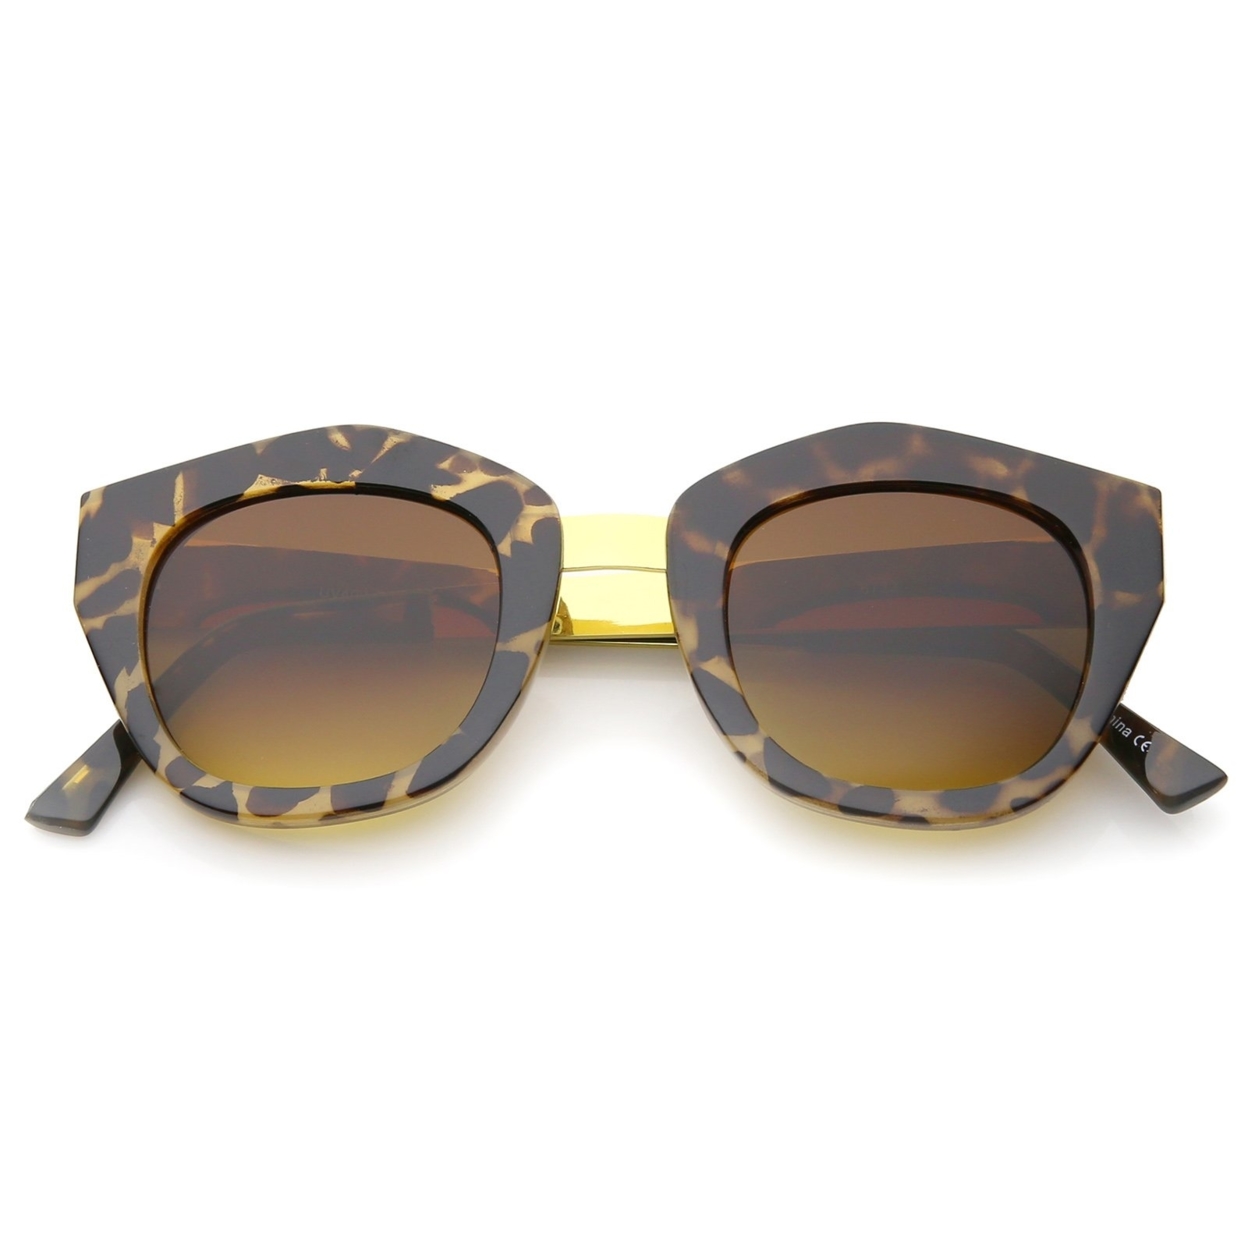 Women's Geometric Metal Bridge And Temple Square Lens Cat Eye Sunglasses 46mm - Creme / Brown